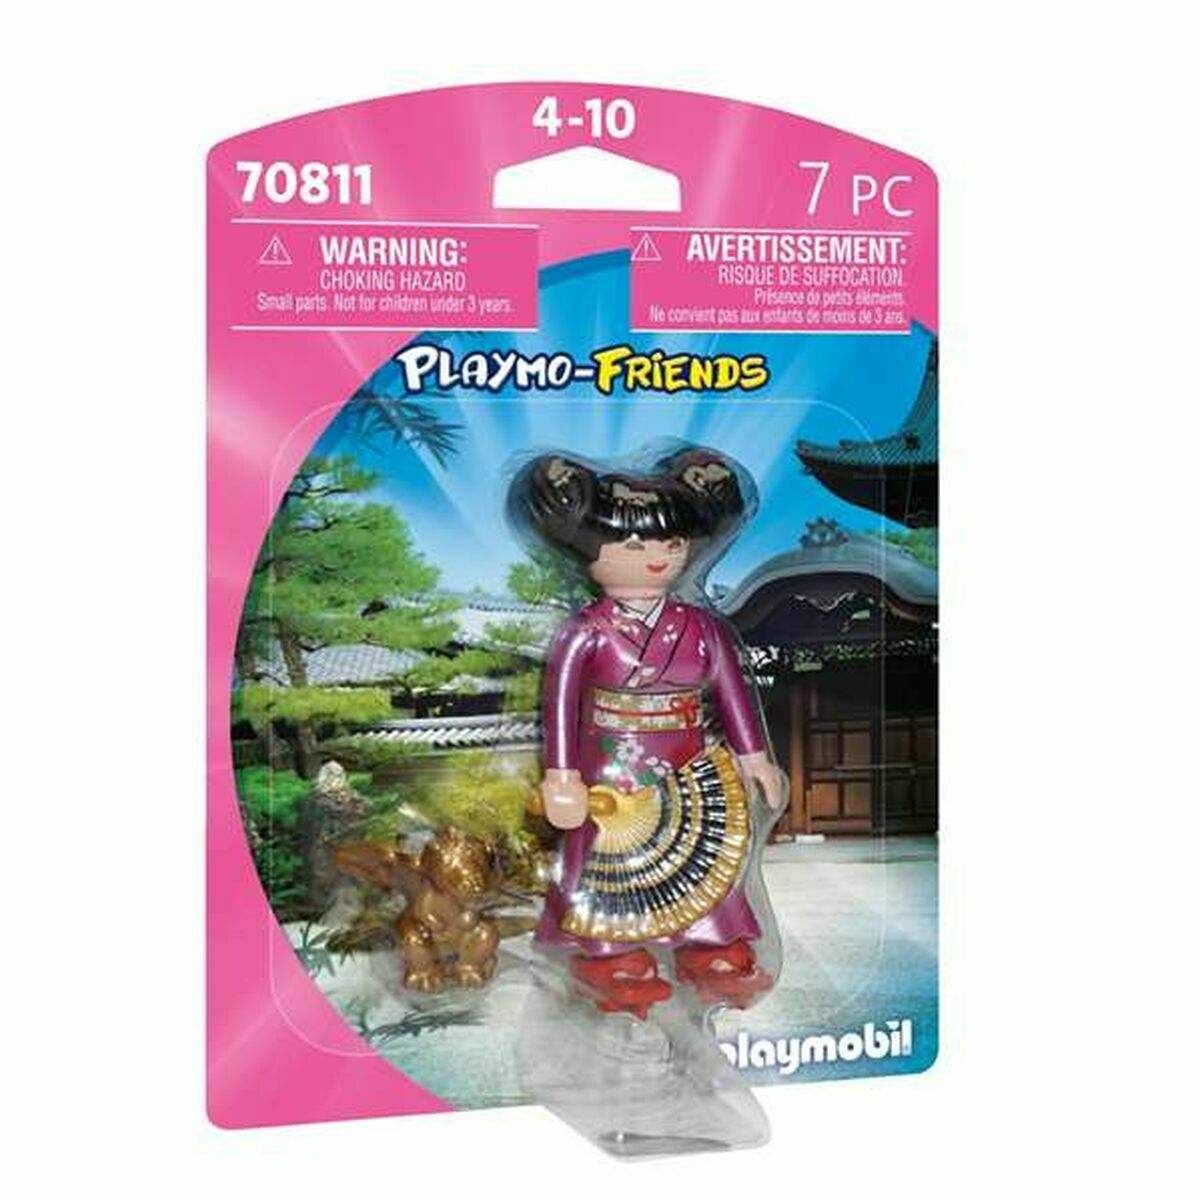 Figurine articulé Playmobil Playmo-Friends 70811 Japonaise Princesse (7 pcs) - Playmobil - Jardin D'Eyden - jardindeyden.fr